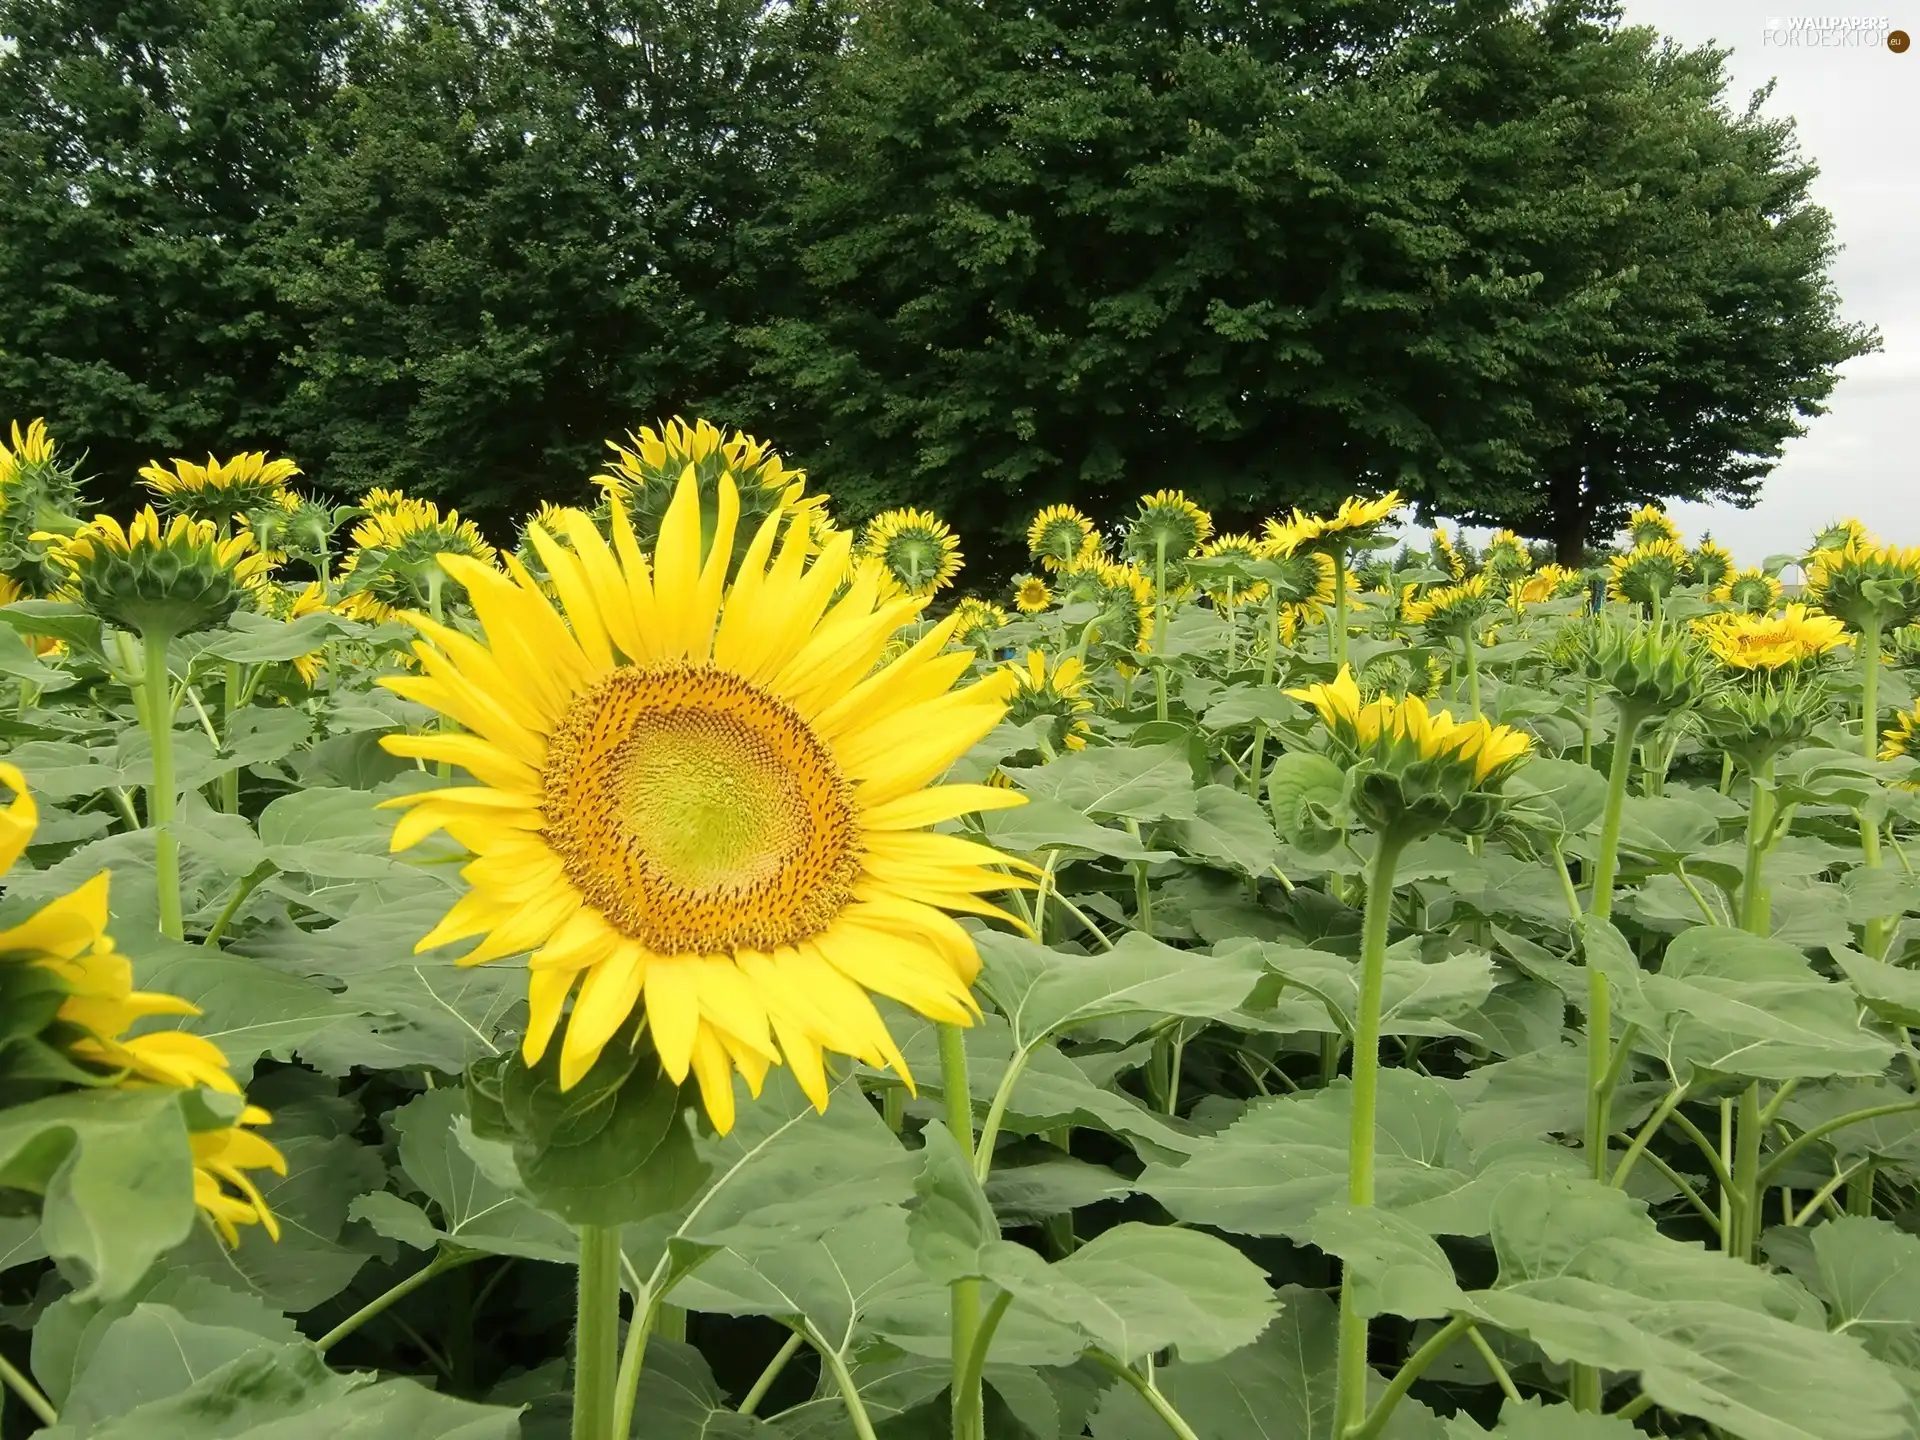 Field, sunflowers